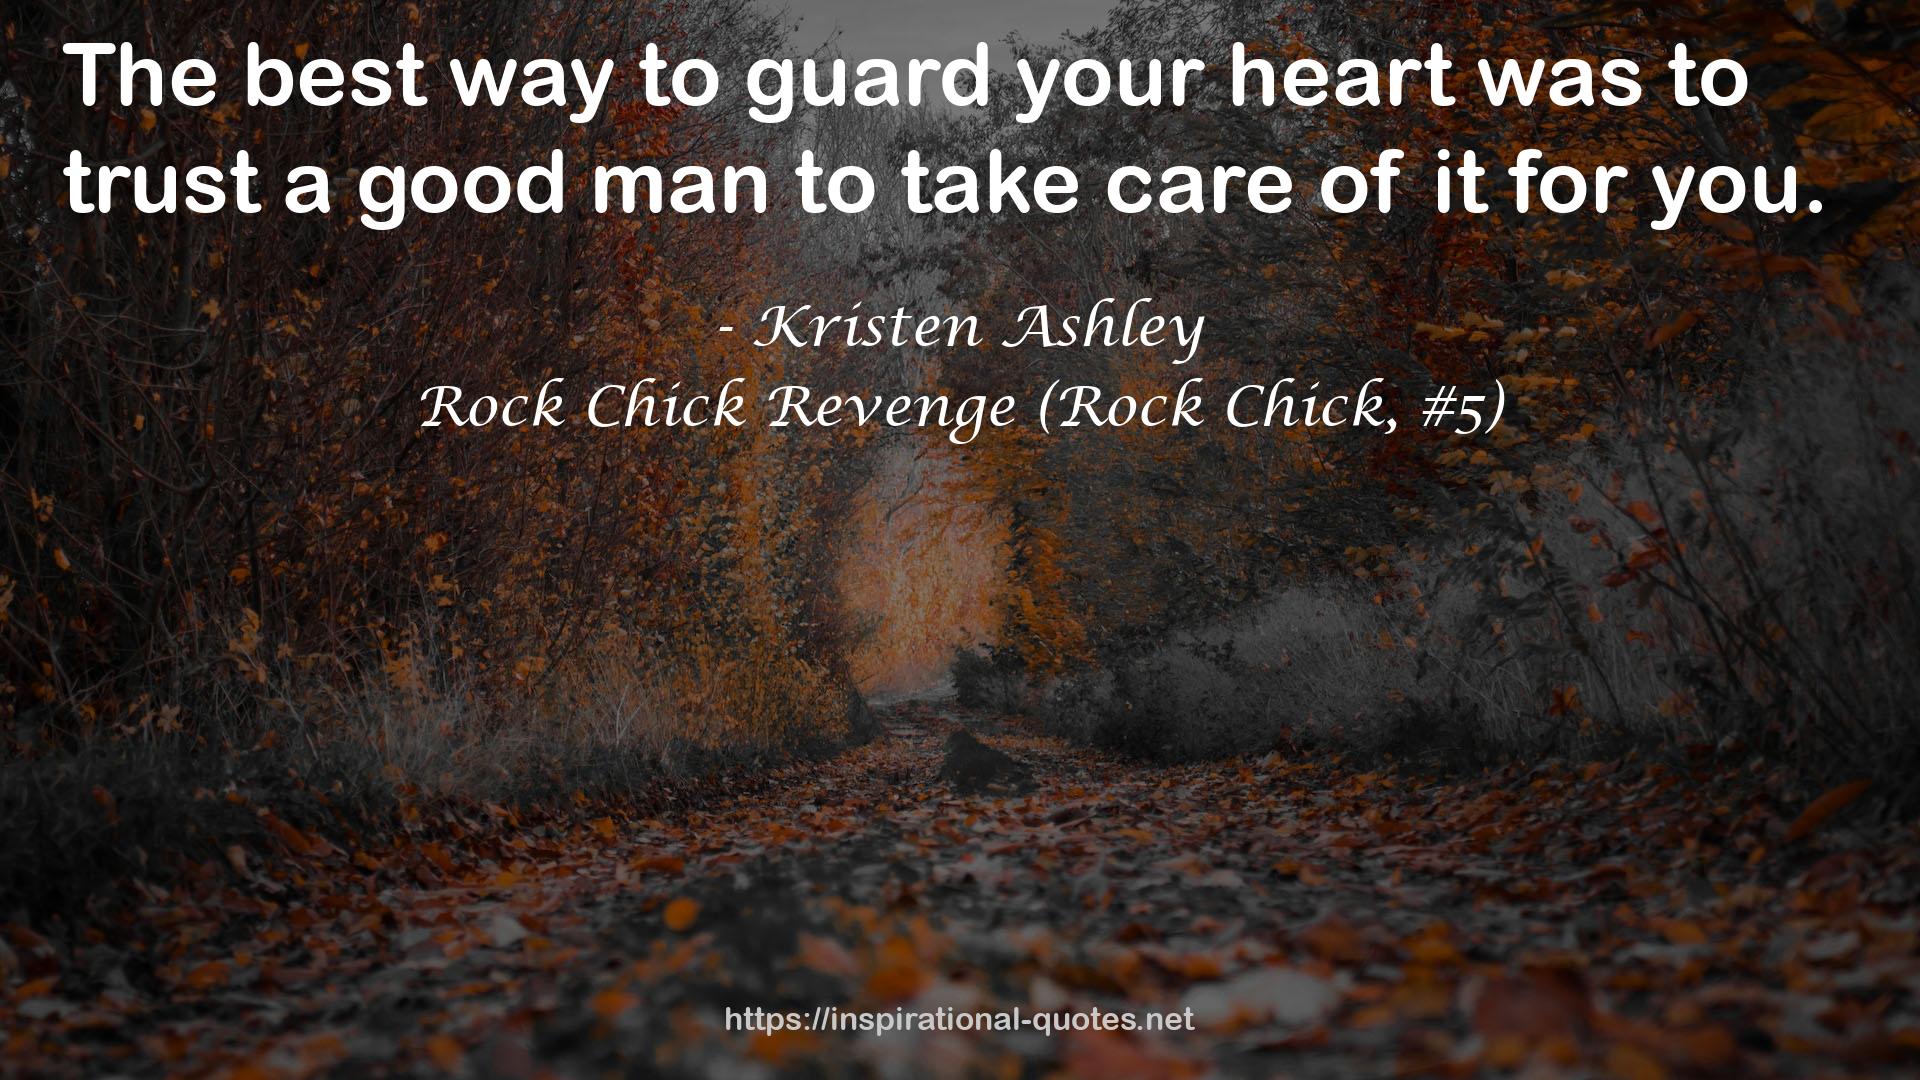 Rock Chick Revenge (Rock Chick, #5) QUOTES